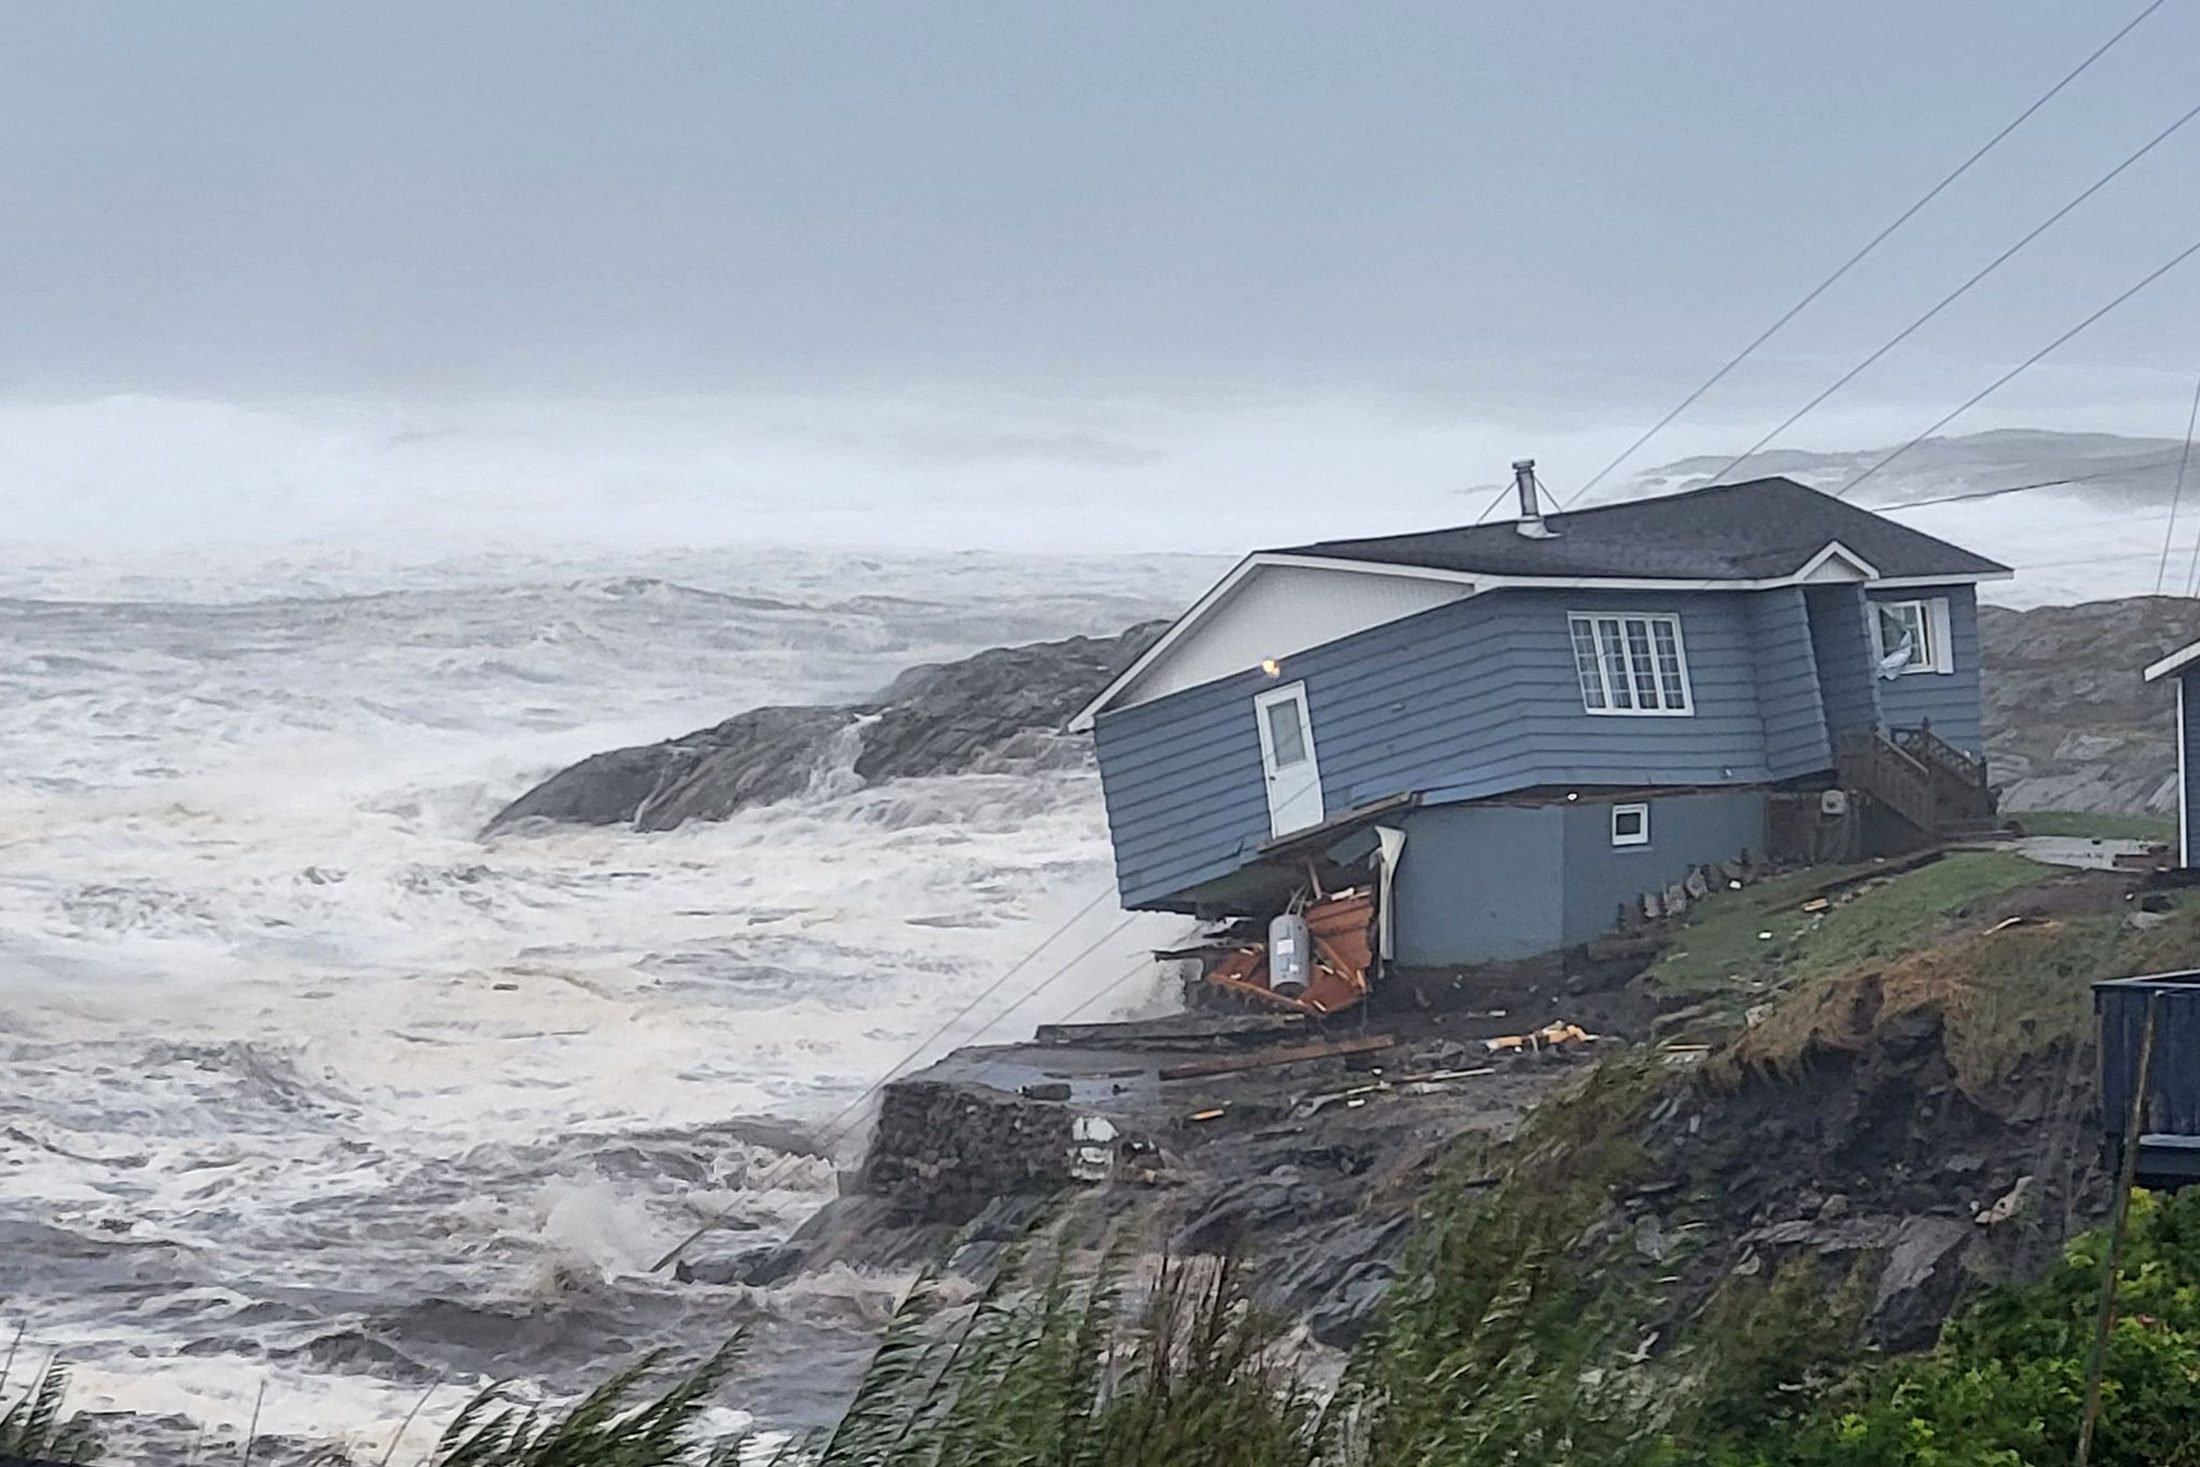 Fiona Slams Into Nova Scotia With Fierce Wind, Flooding Rain